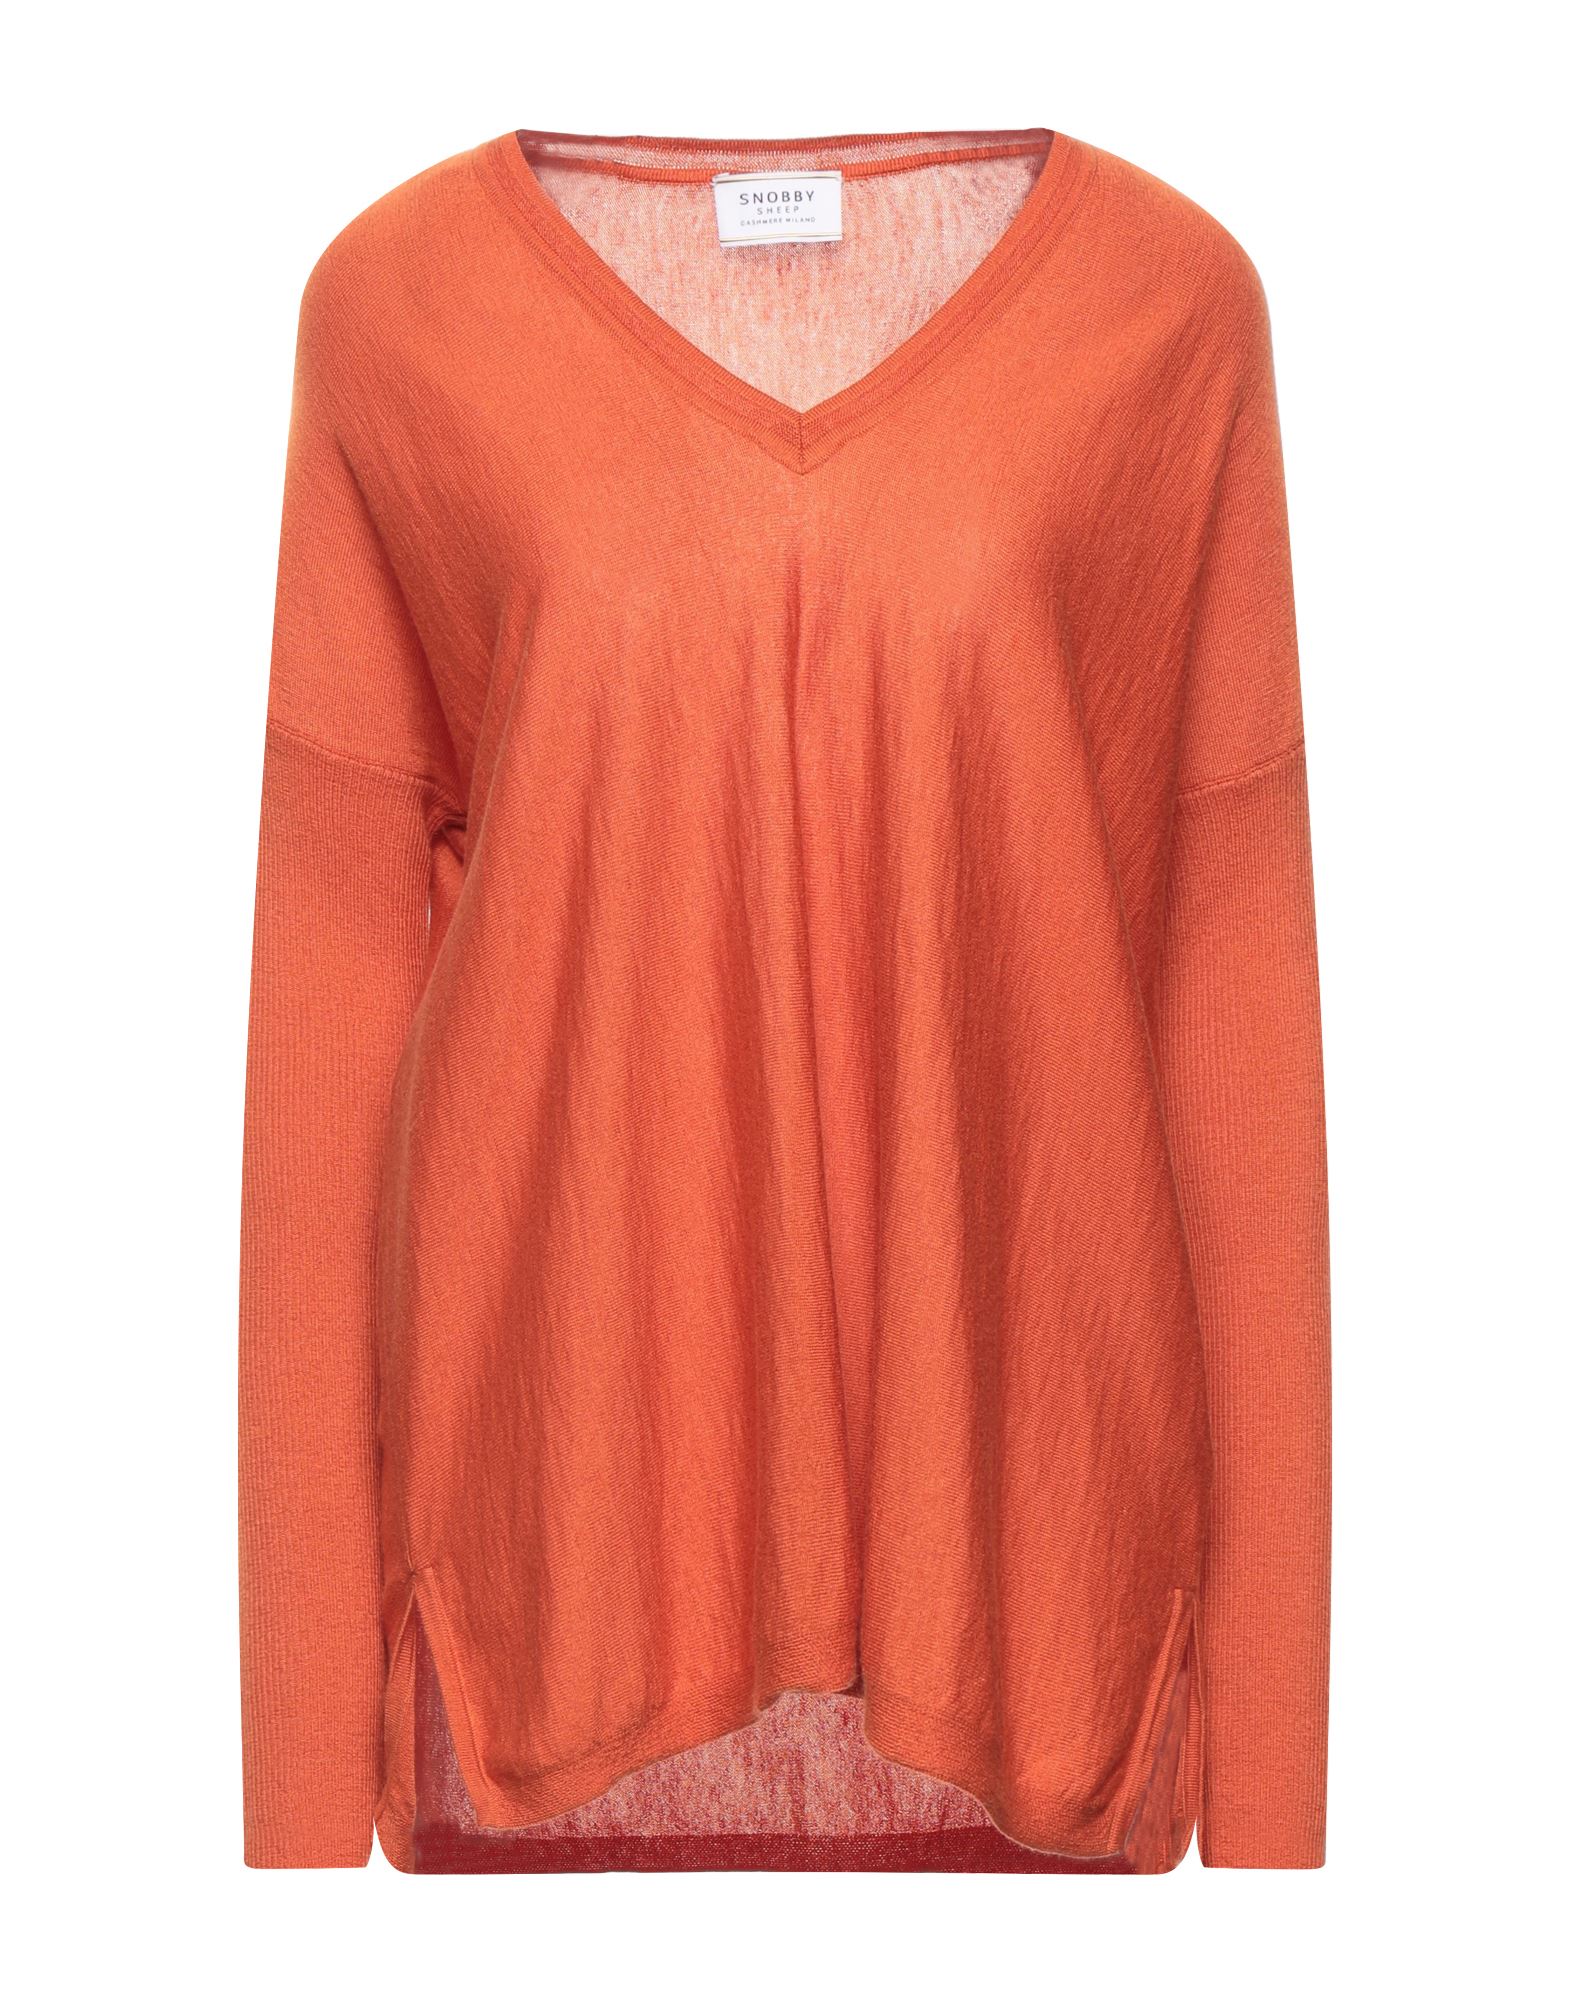 Snobby Sheep Sweaters In Orange